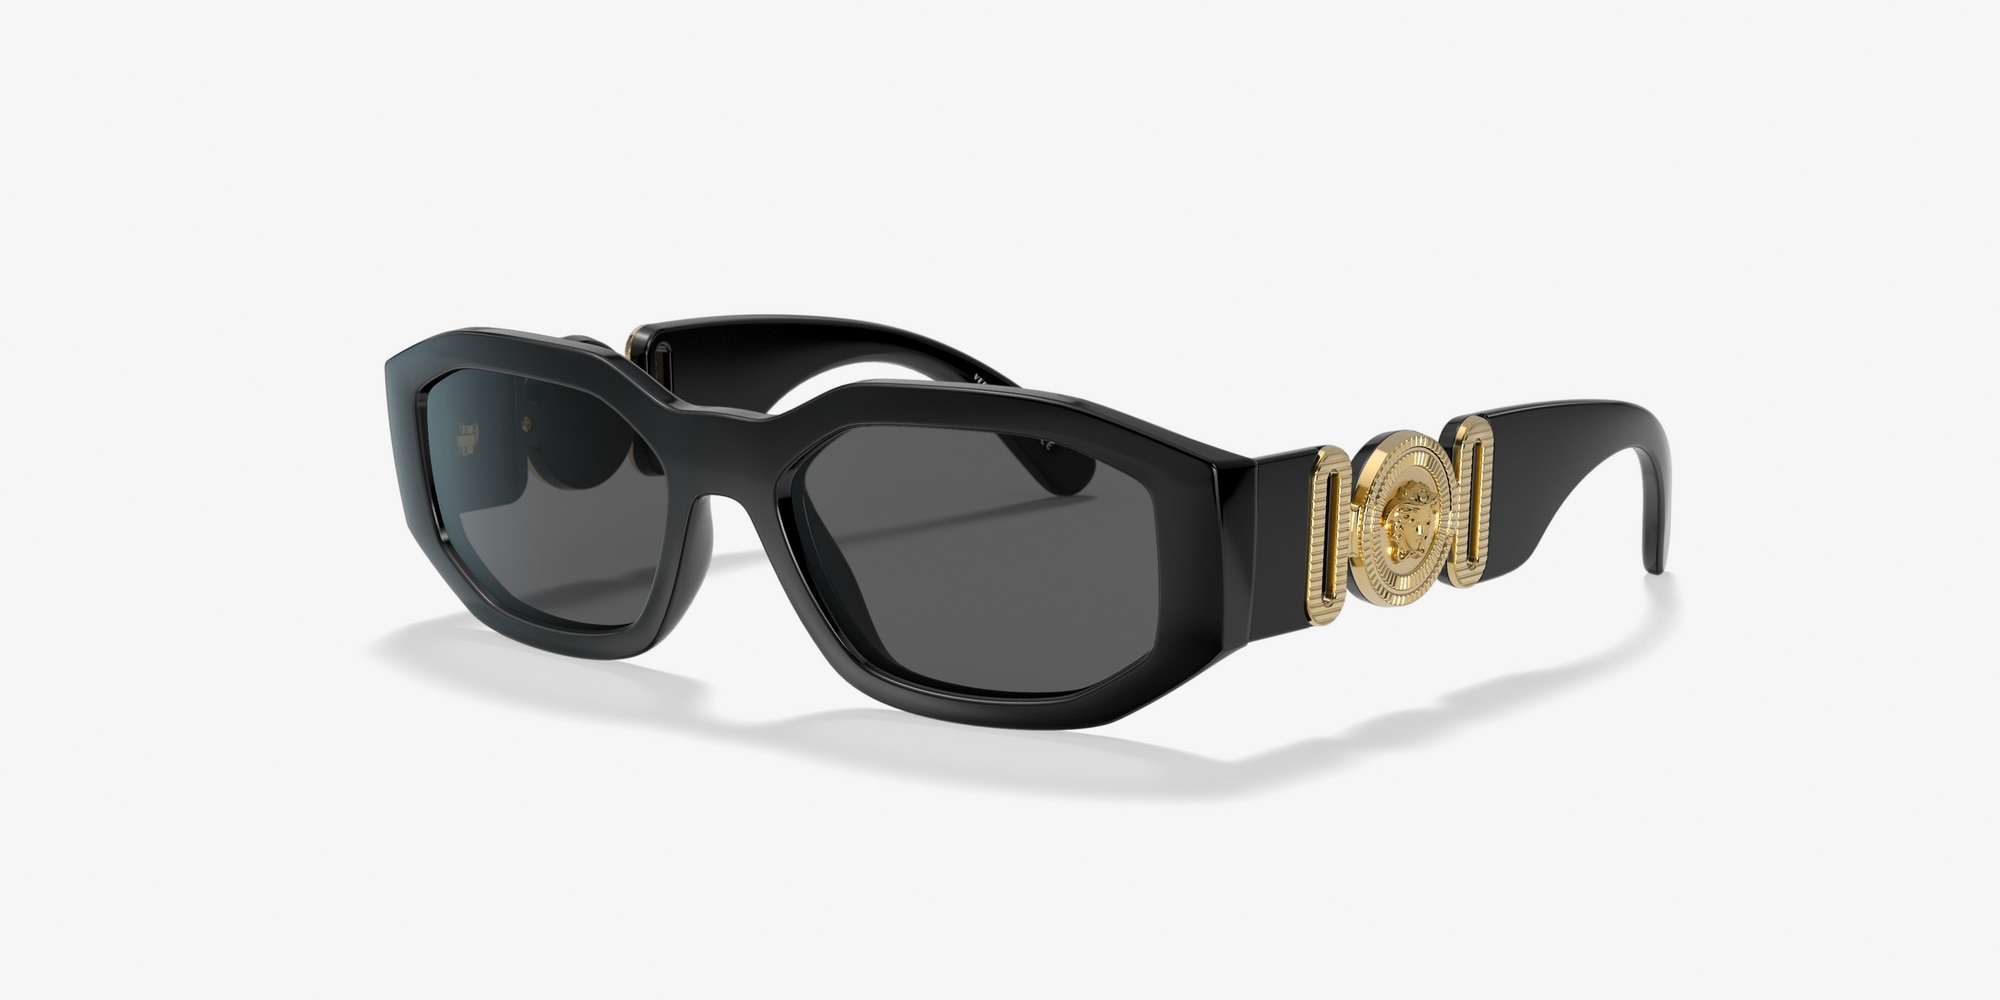 versace ve4361 sunglasses